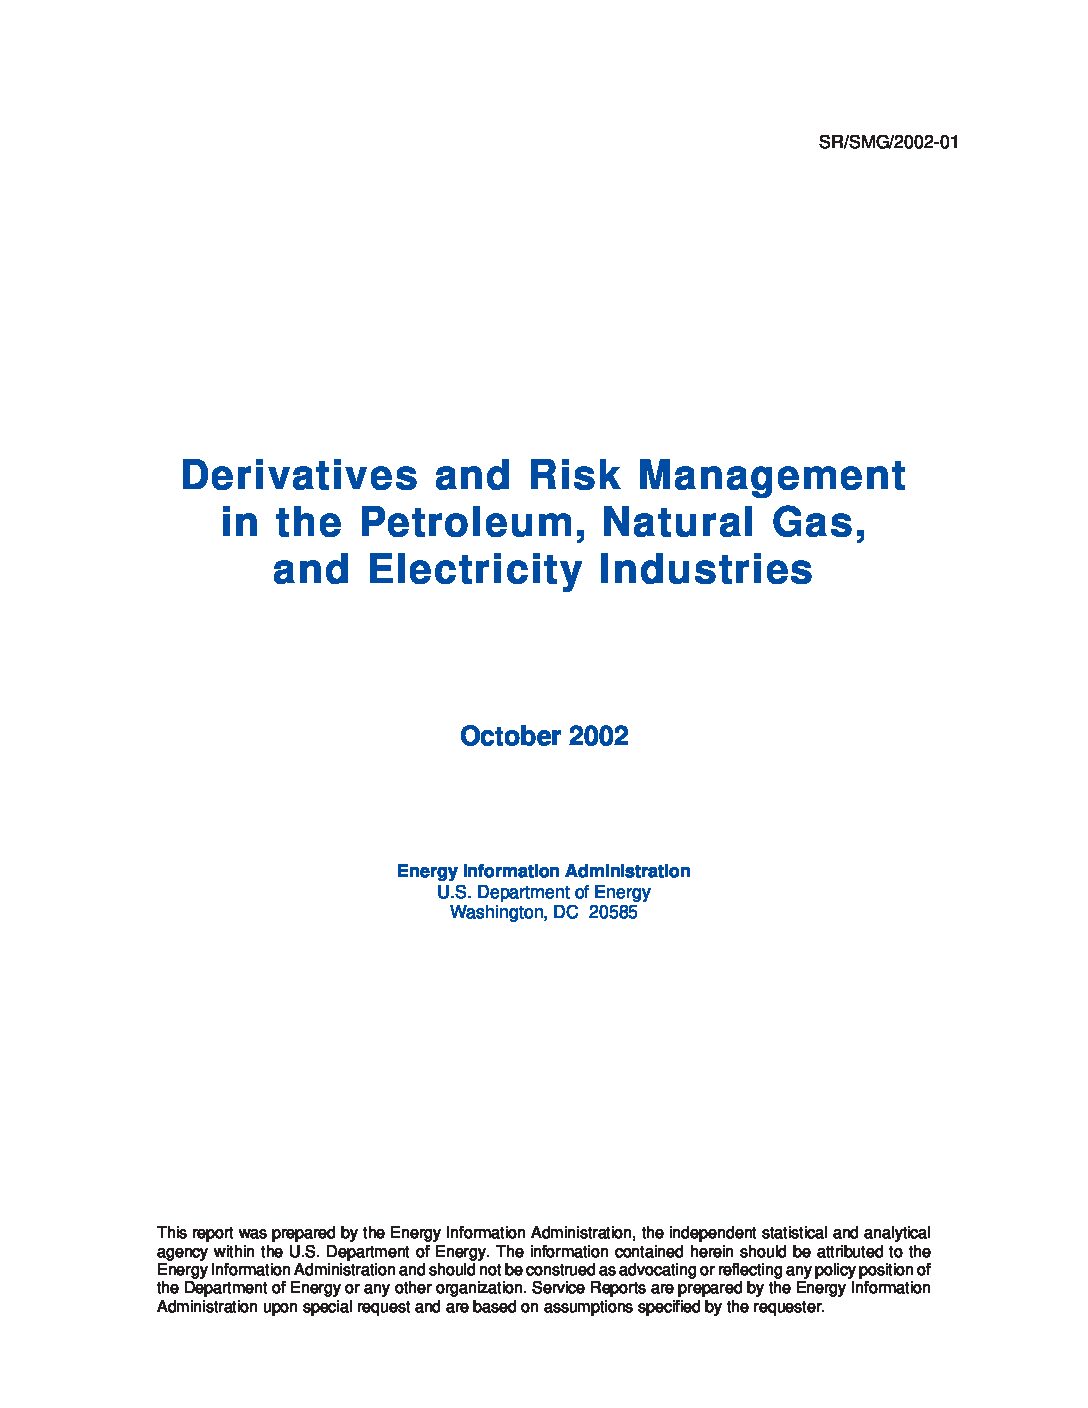 EIA Derivatives Report 1 pdf